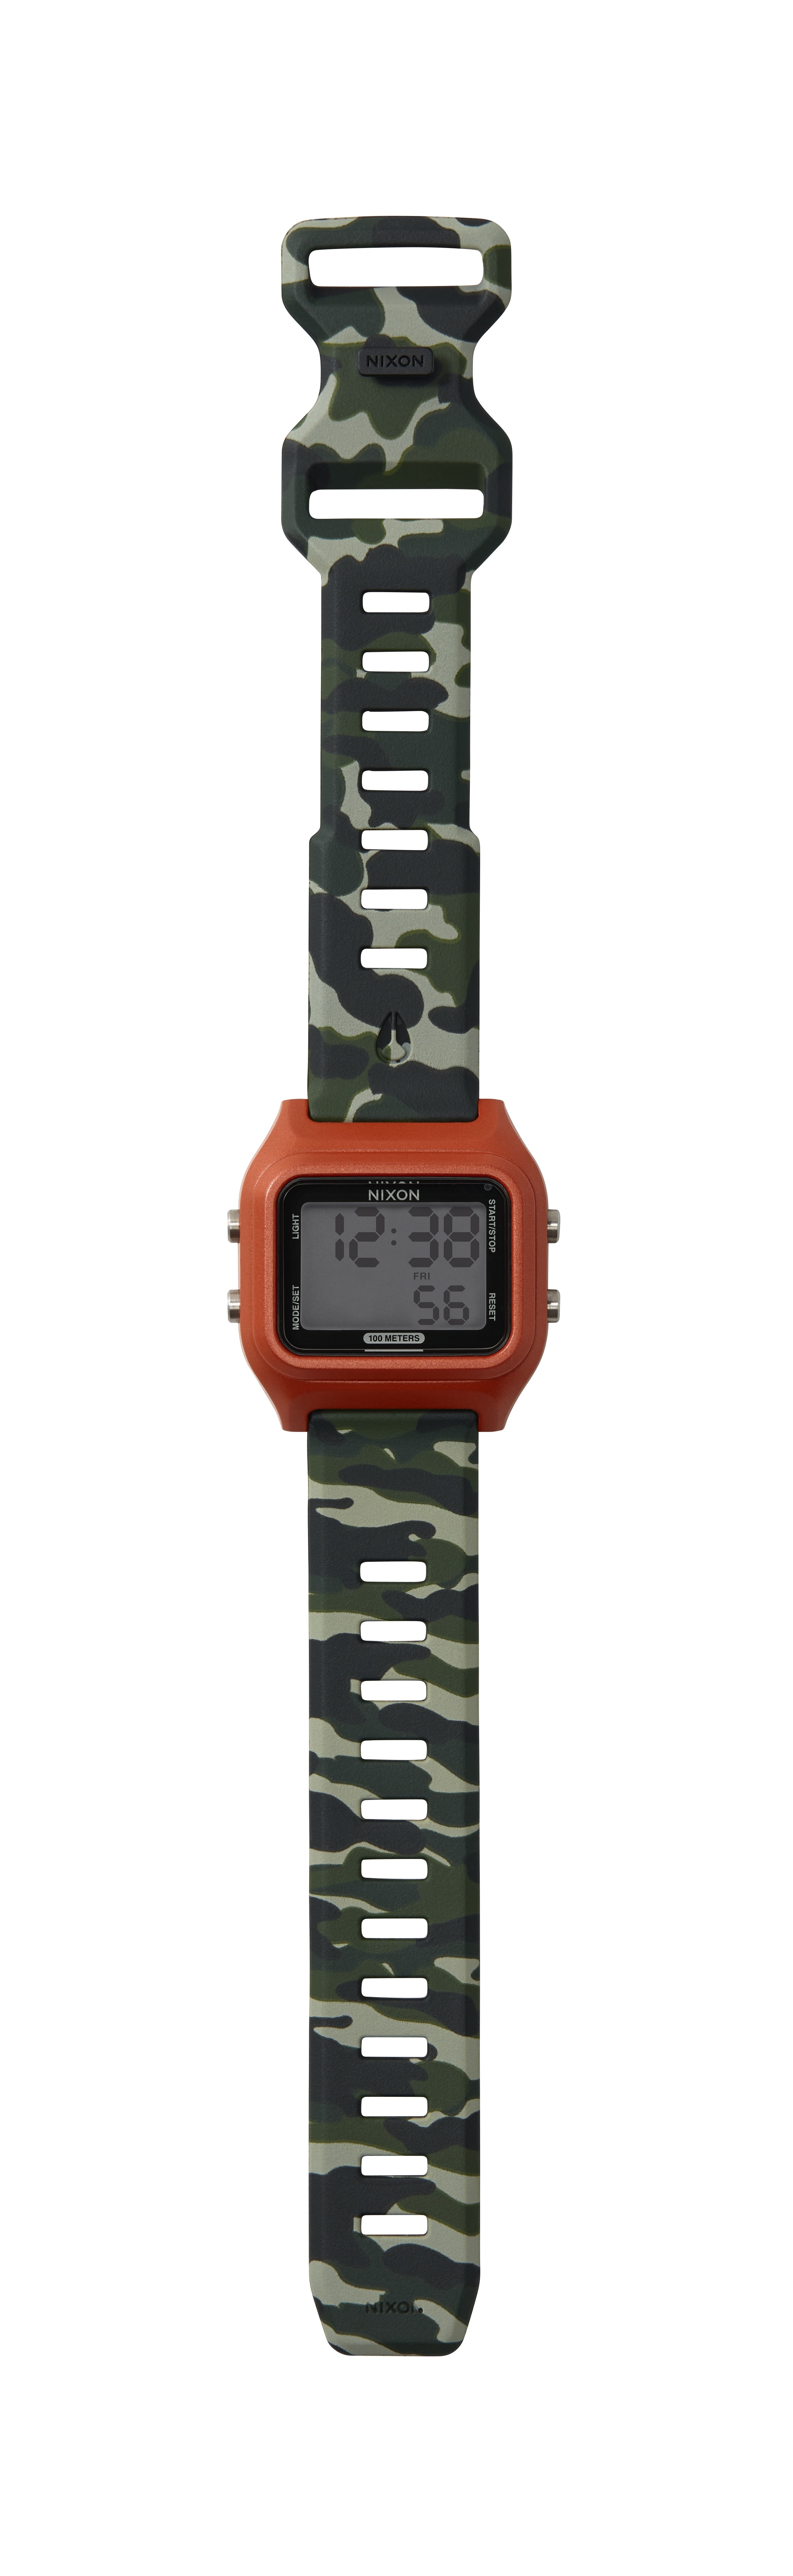 new nixon watch